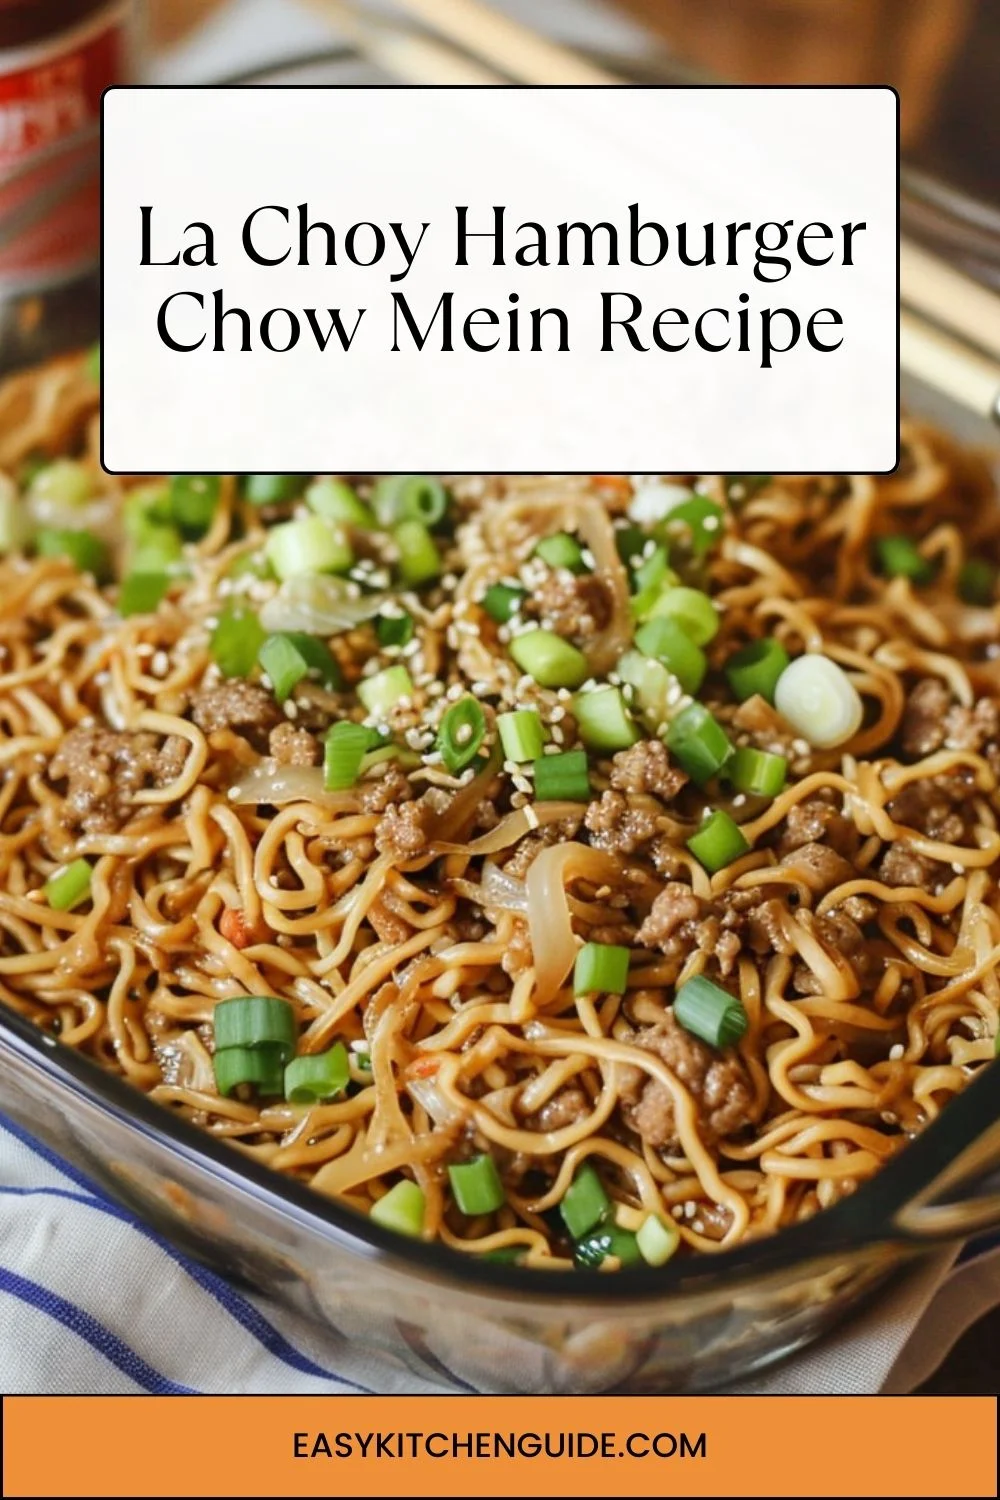 La Choy Hamburger Chow Mein Recipe